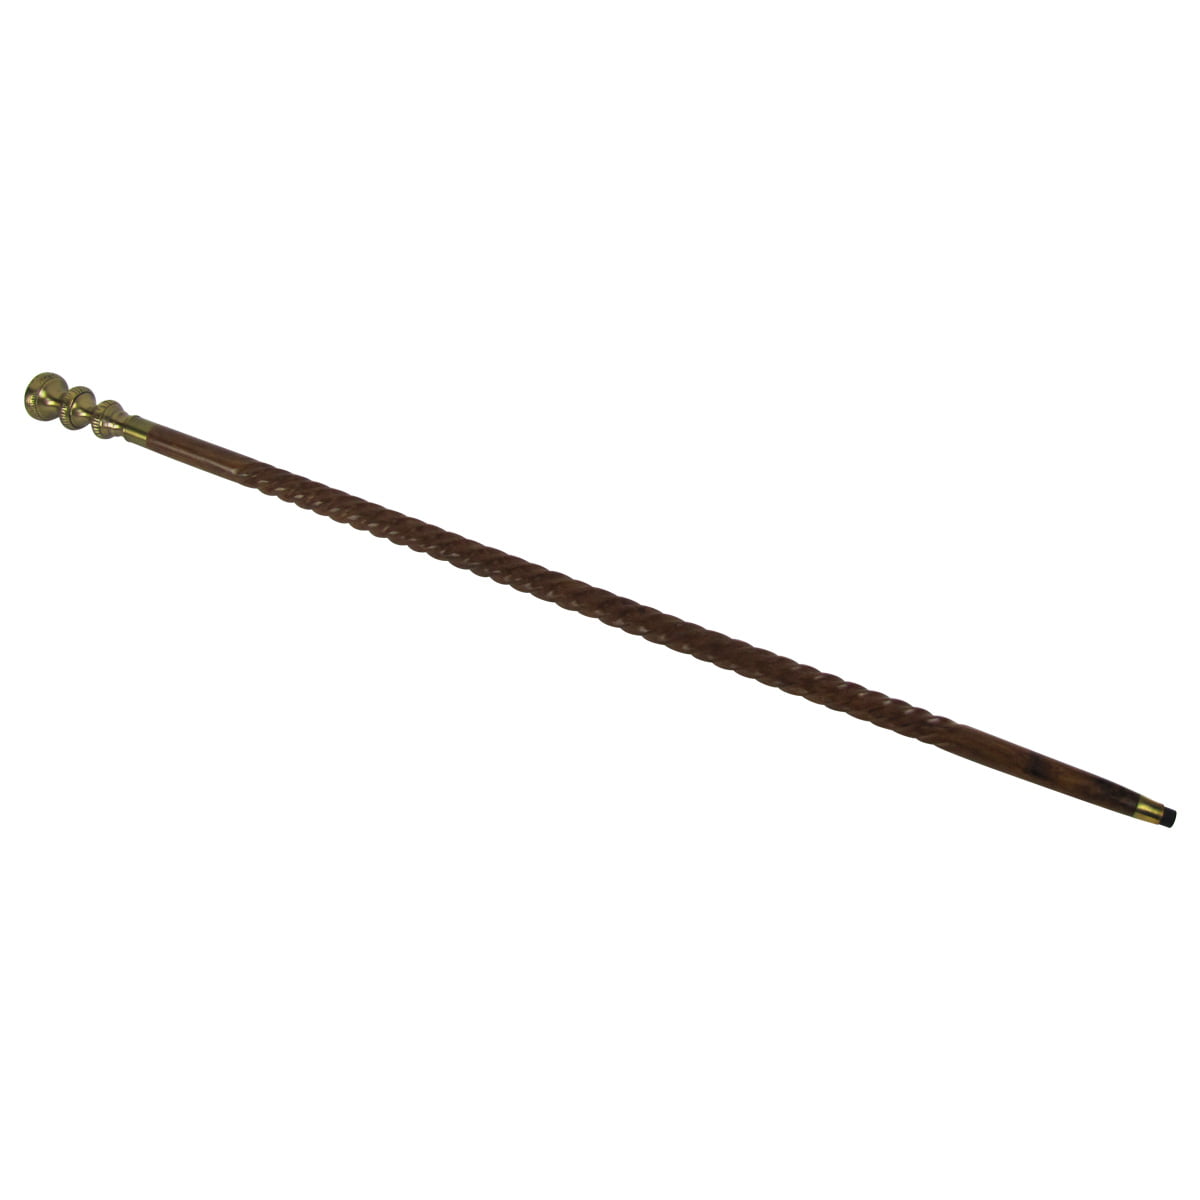 Details about   Brass Designer Victorian Handle Wooden Vintage Walking Cane Antique Style Stick 